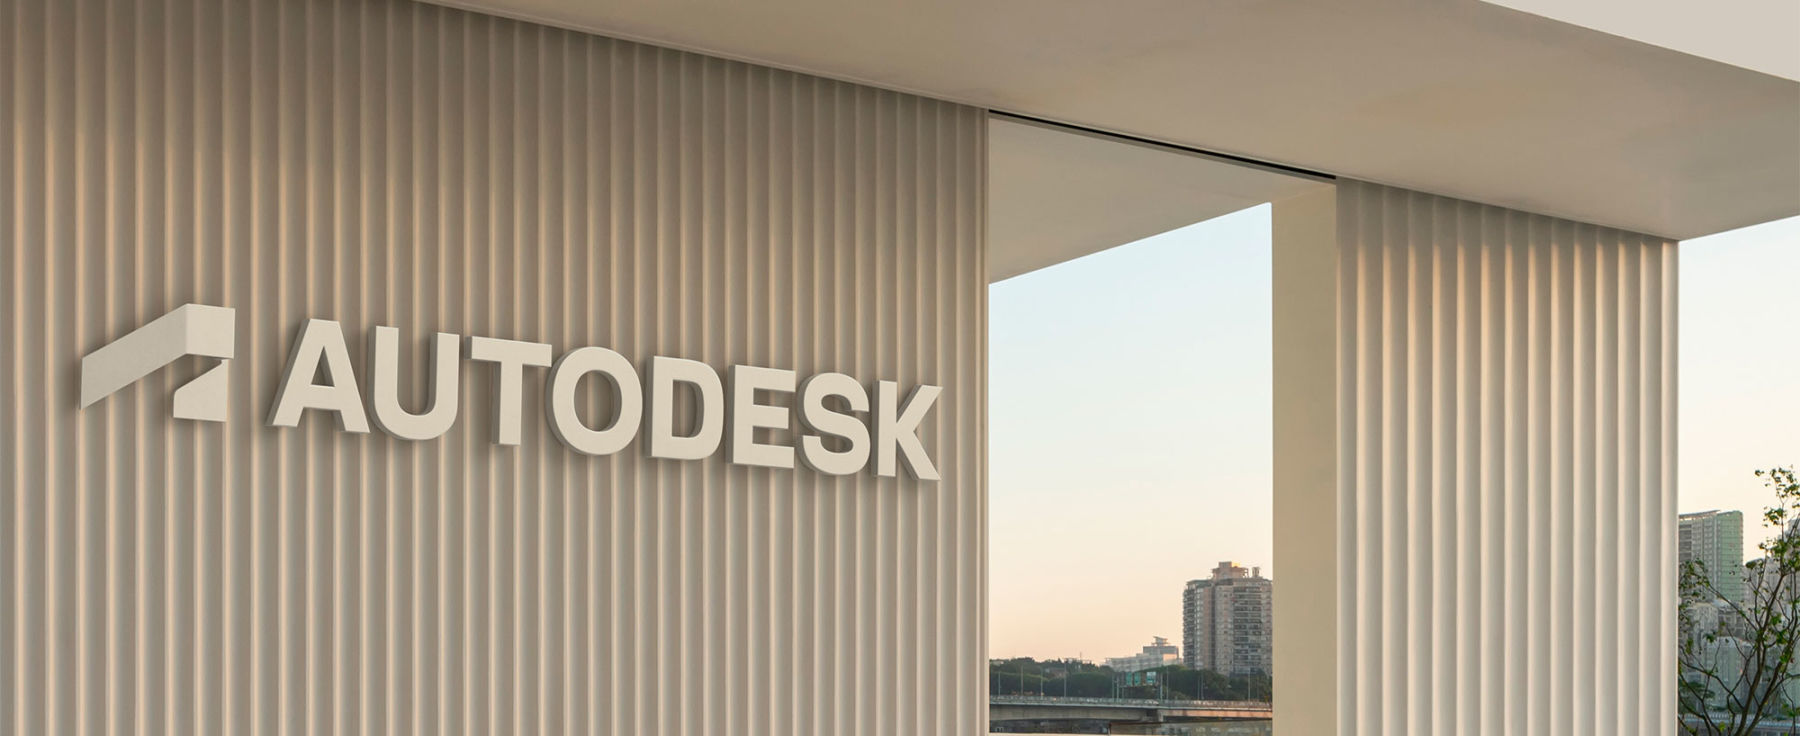 Autodesk: Brand Identity 